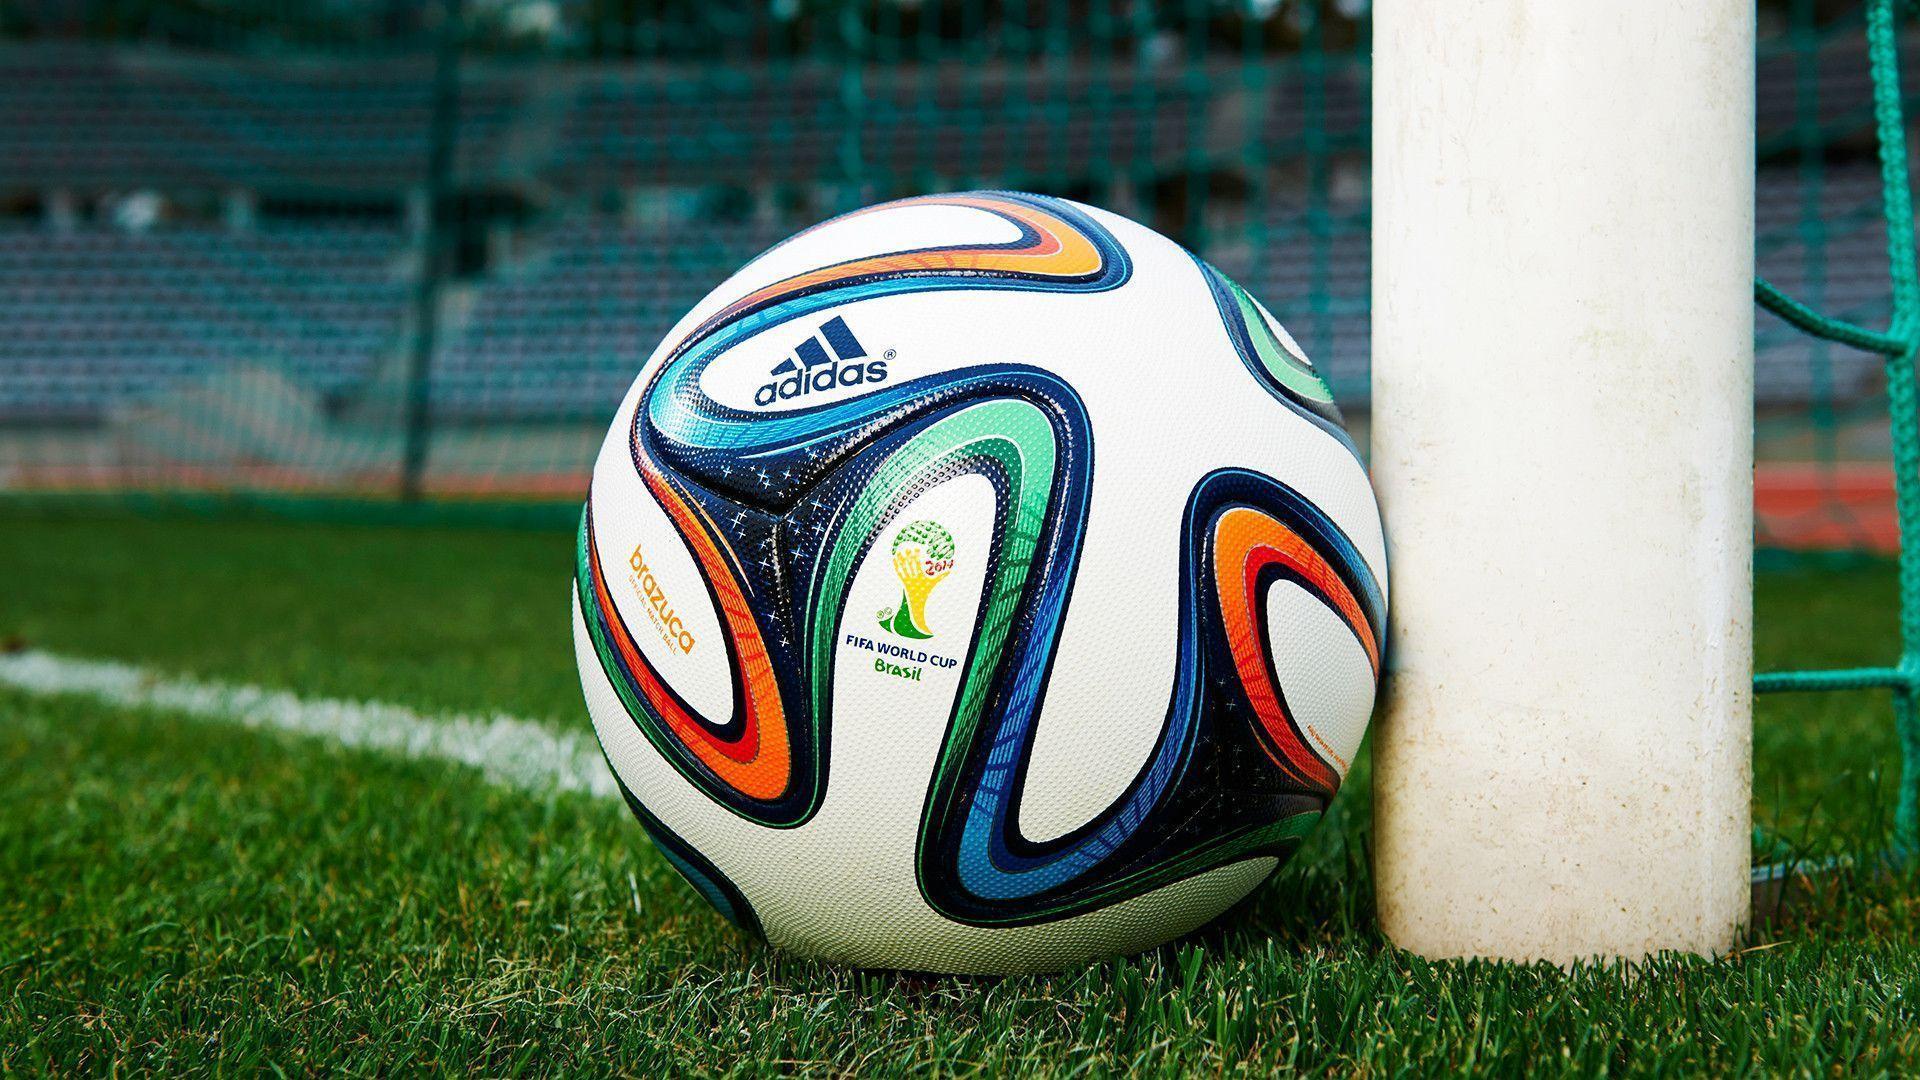 Download Full HD Adidas Bracuza World Cup 2015 Brazil Wallpaper